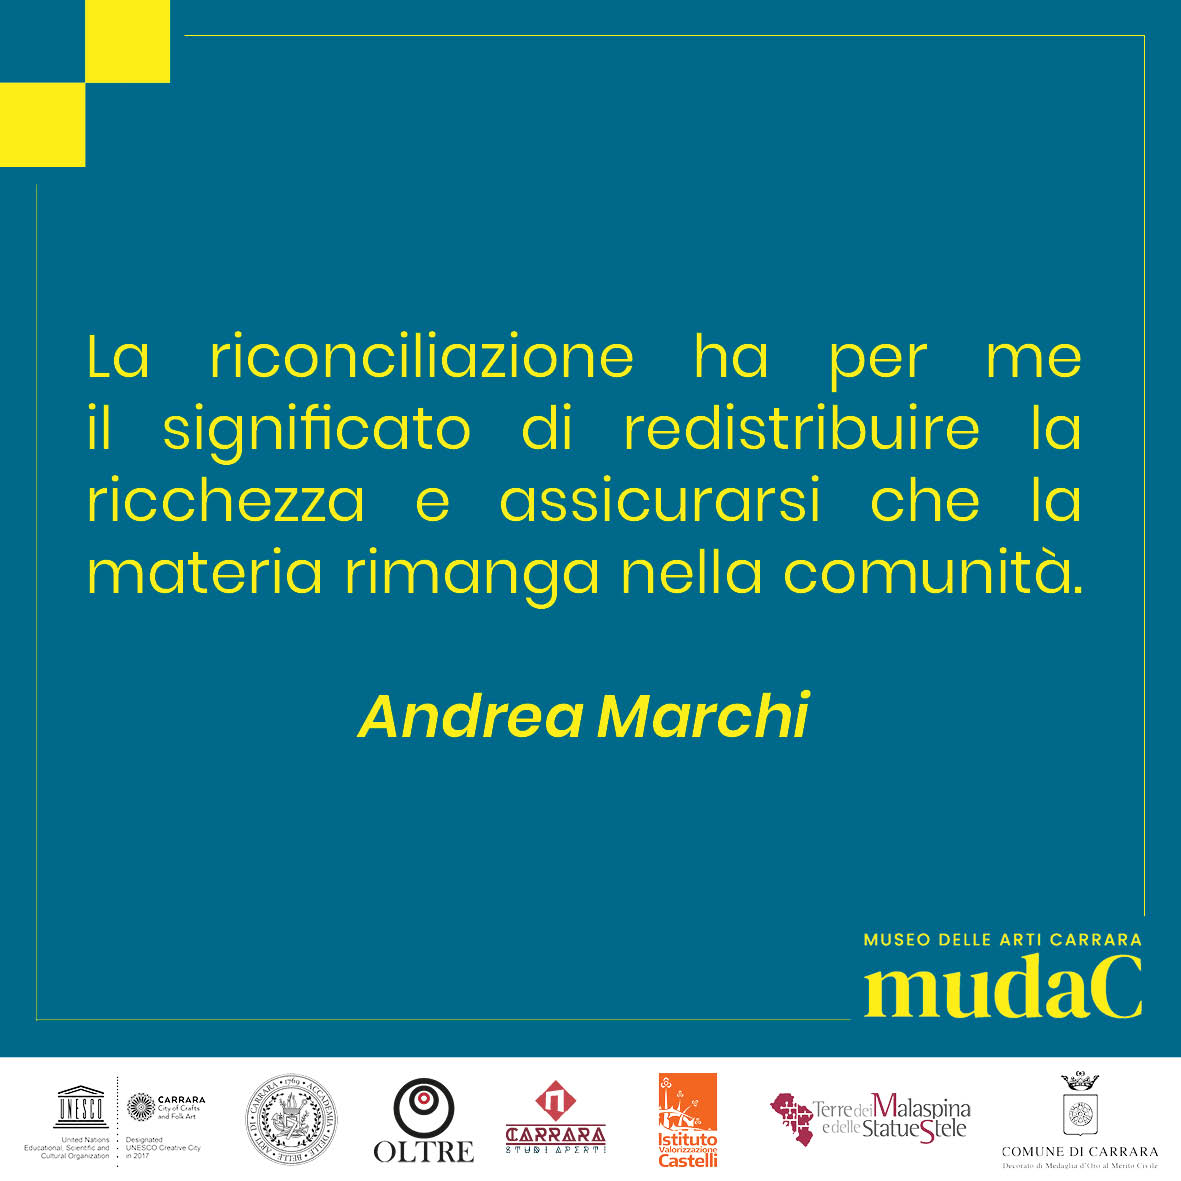 Andrea Marchi